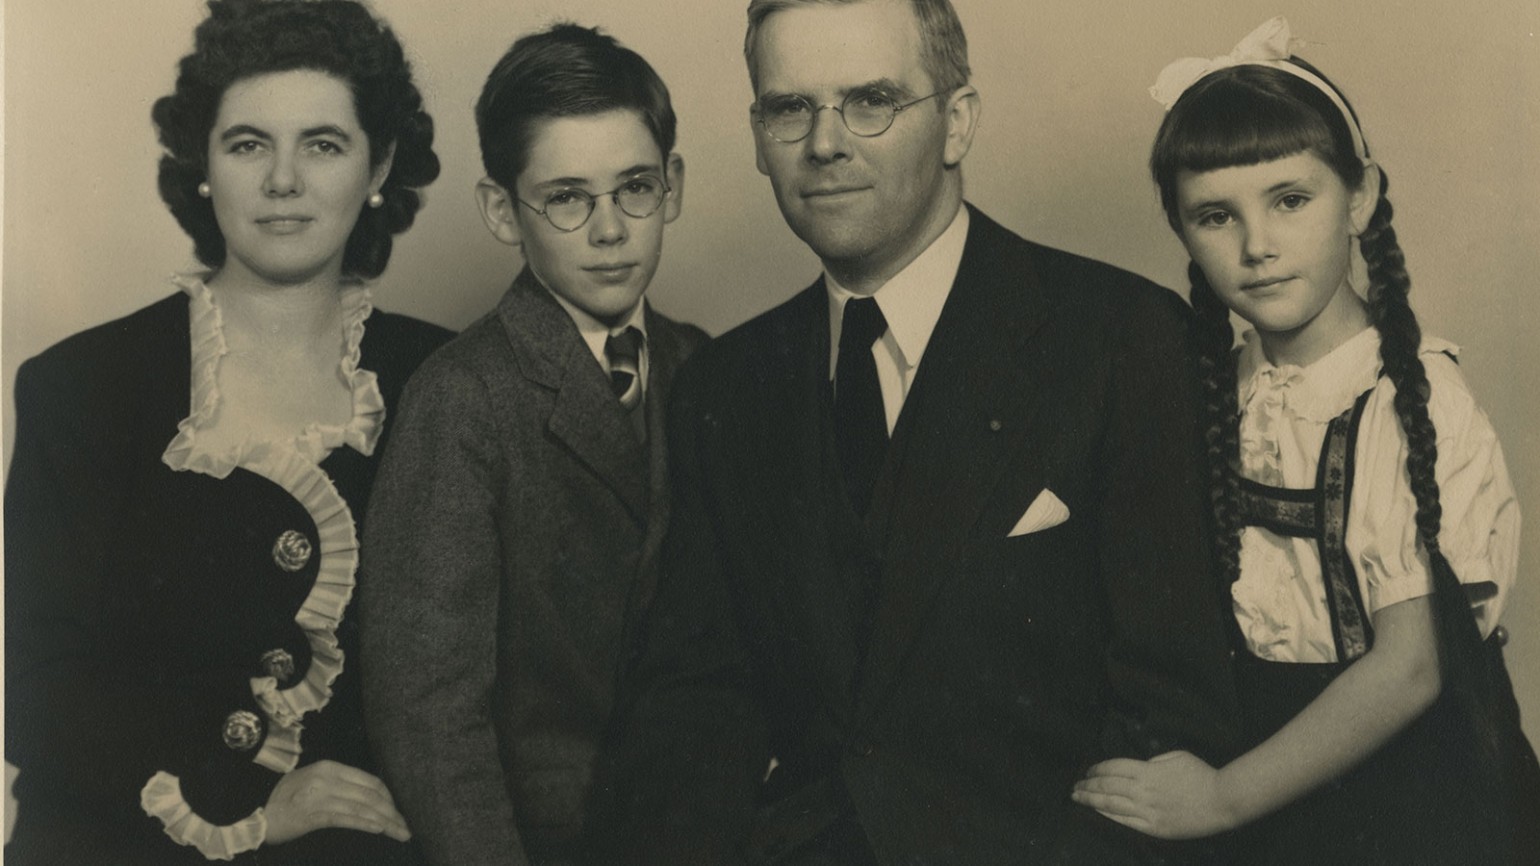 Sharp family portrait. From left: Martha Sharp, Hastings Sharp, Waitstill Sharp, and Martha Content Sharp, 1947. Photo courtesy of Sharp Family Archives.